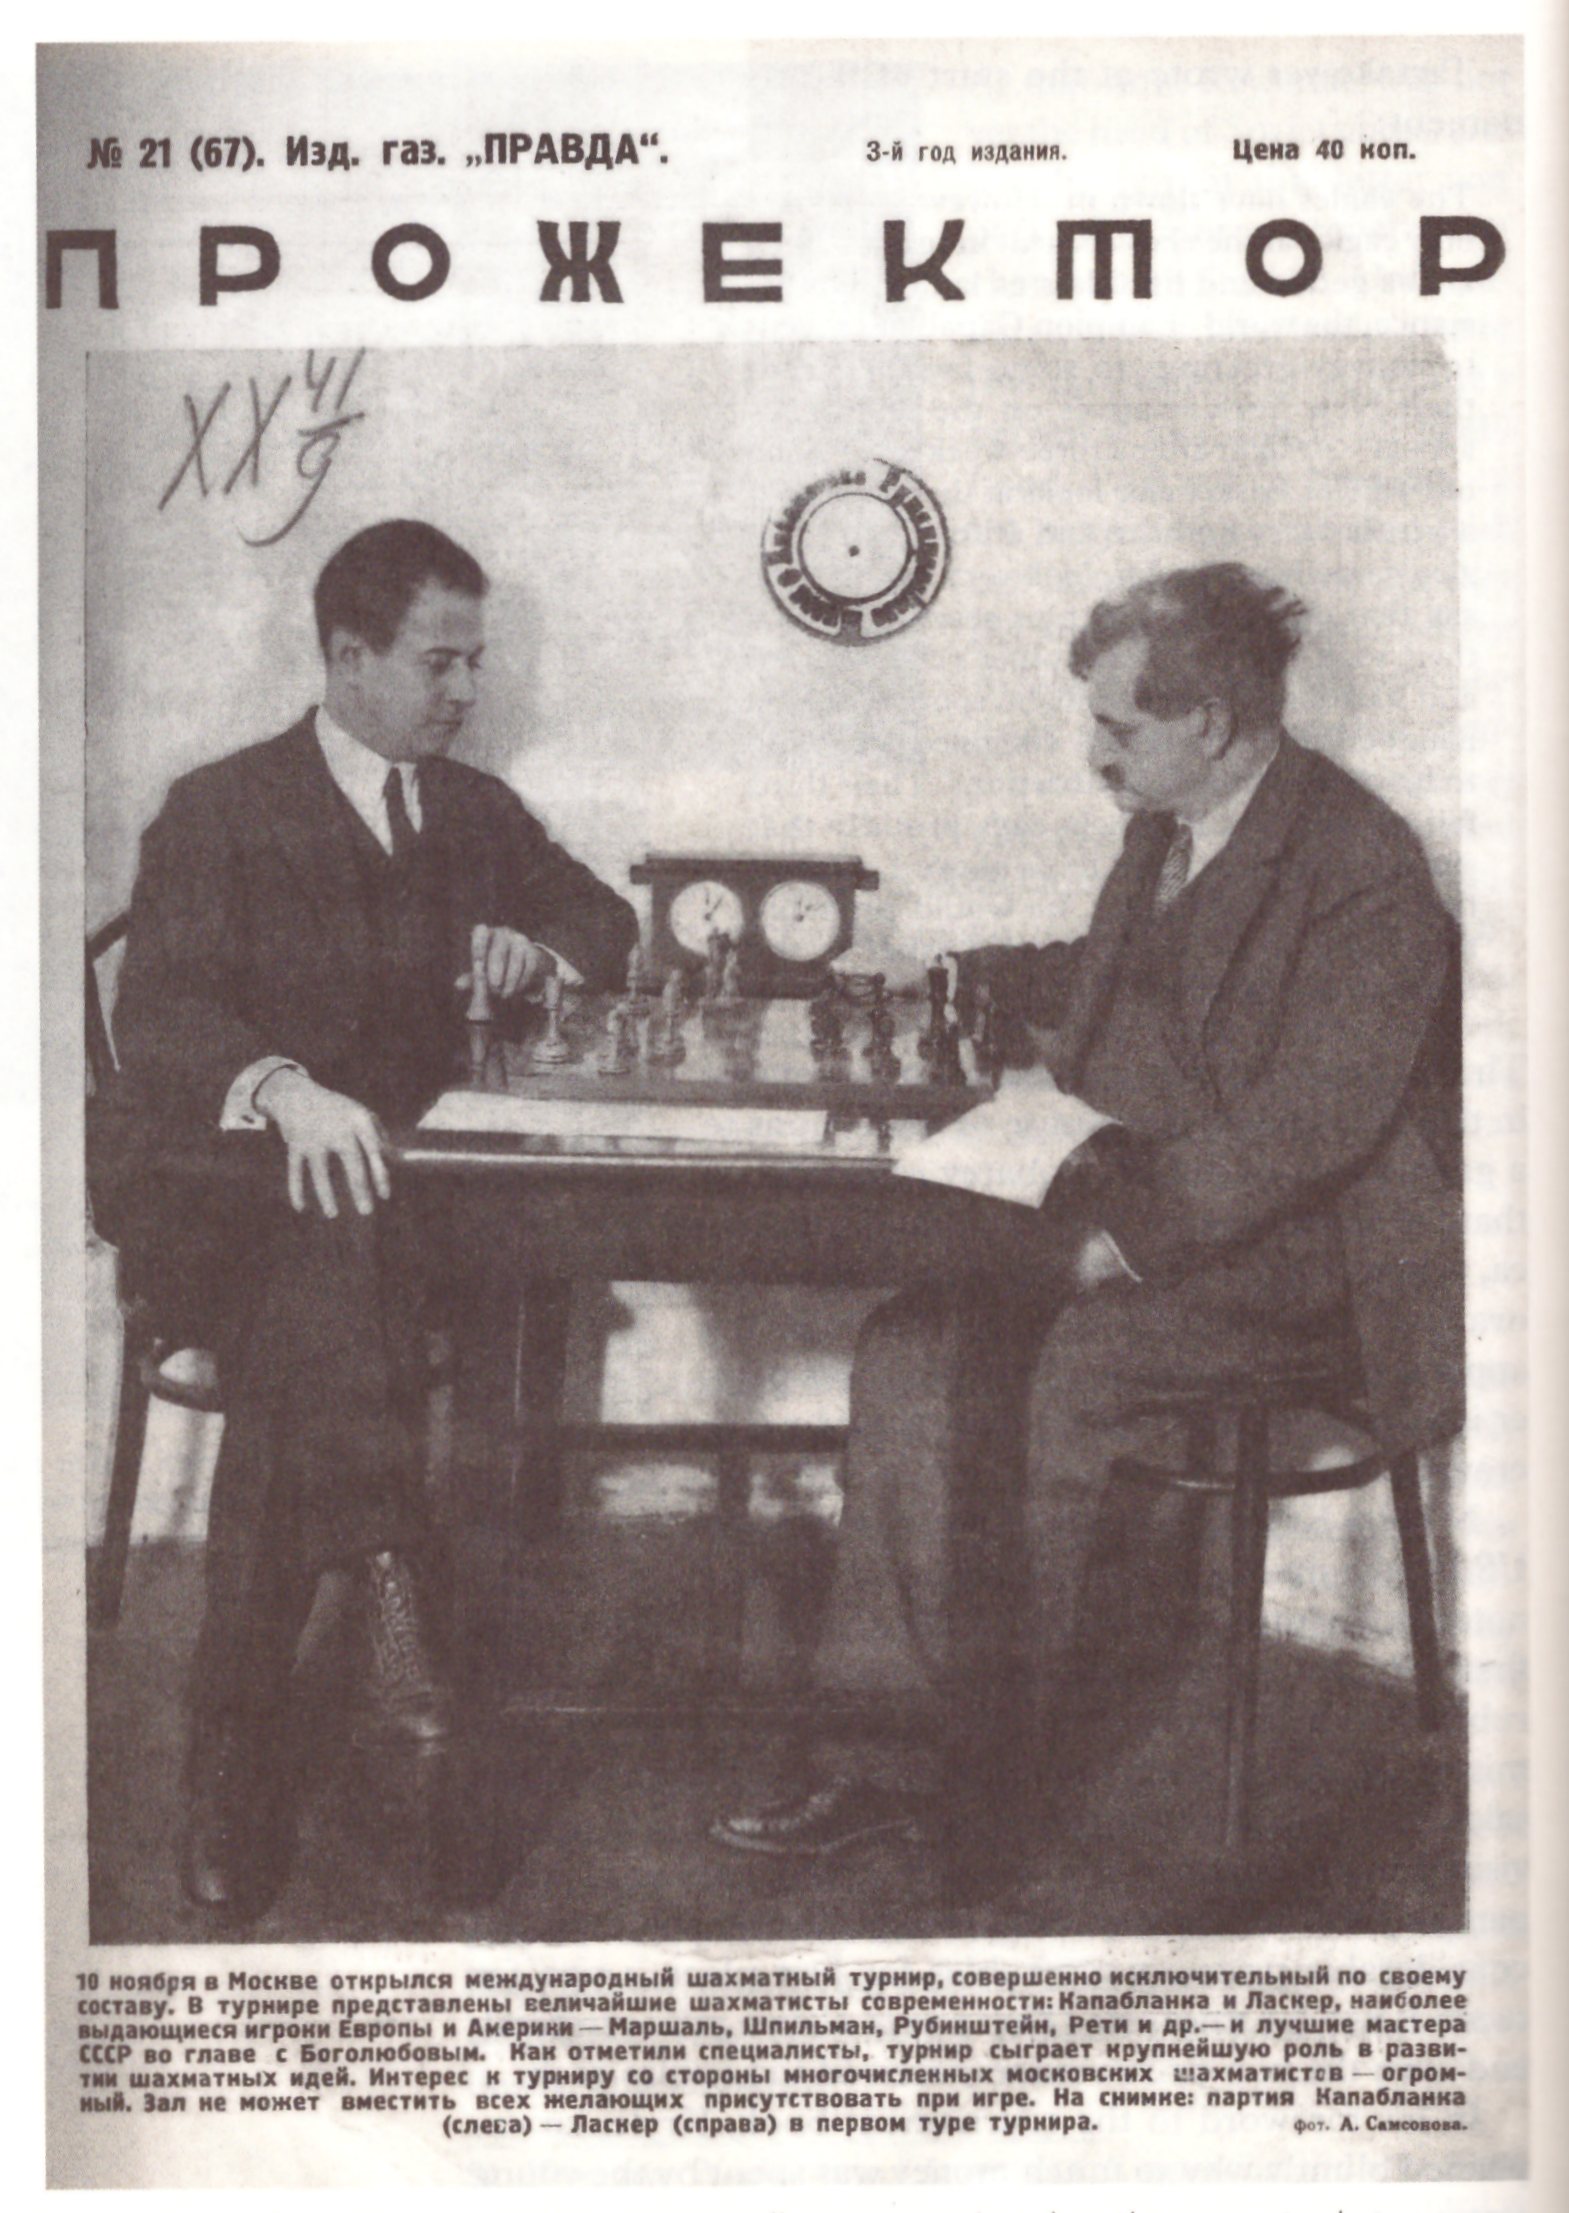 Emanuel Lasker: Second World Chess Champion (World Chess Champions